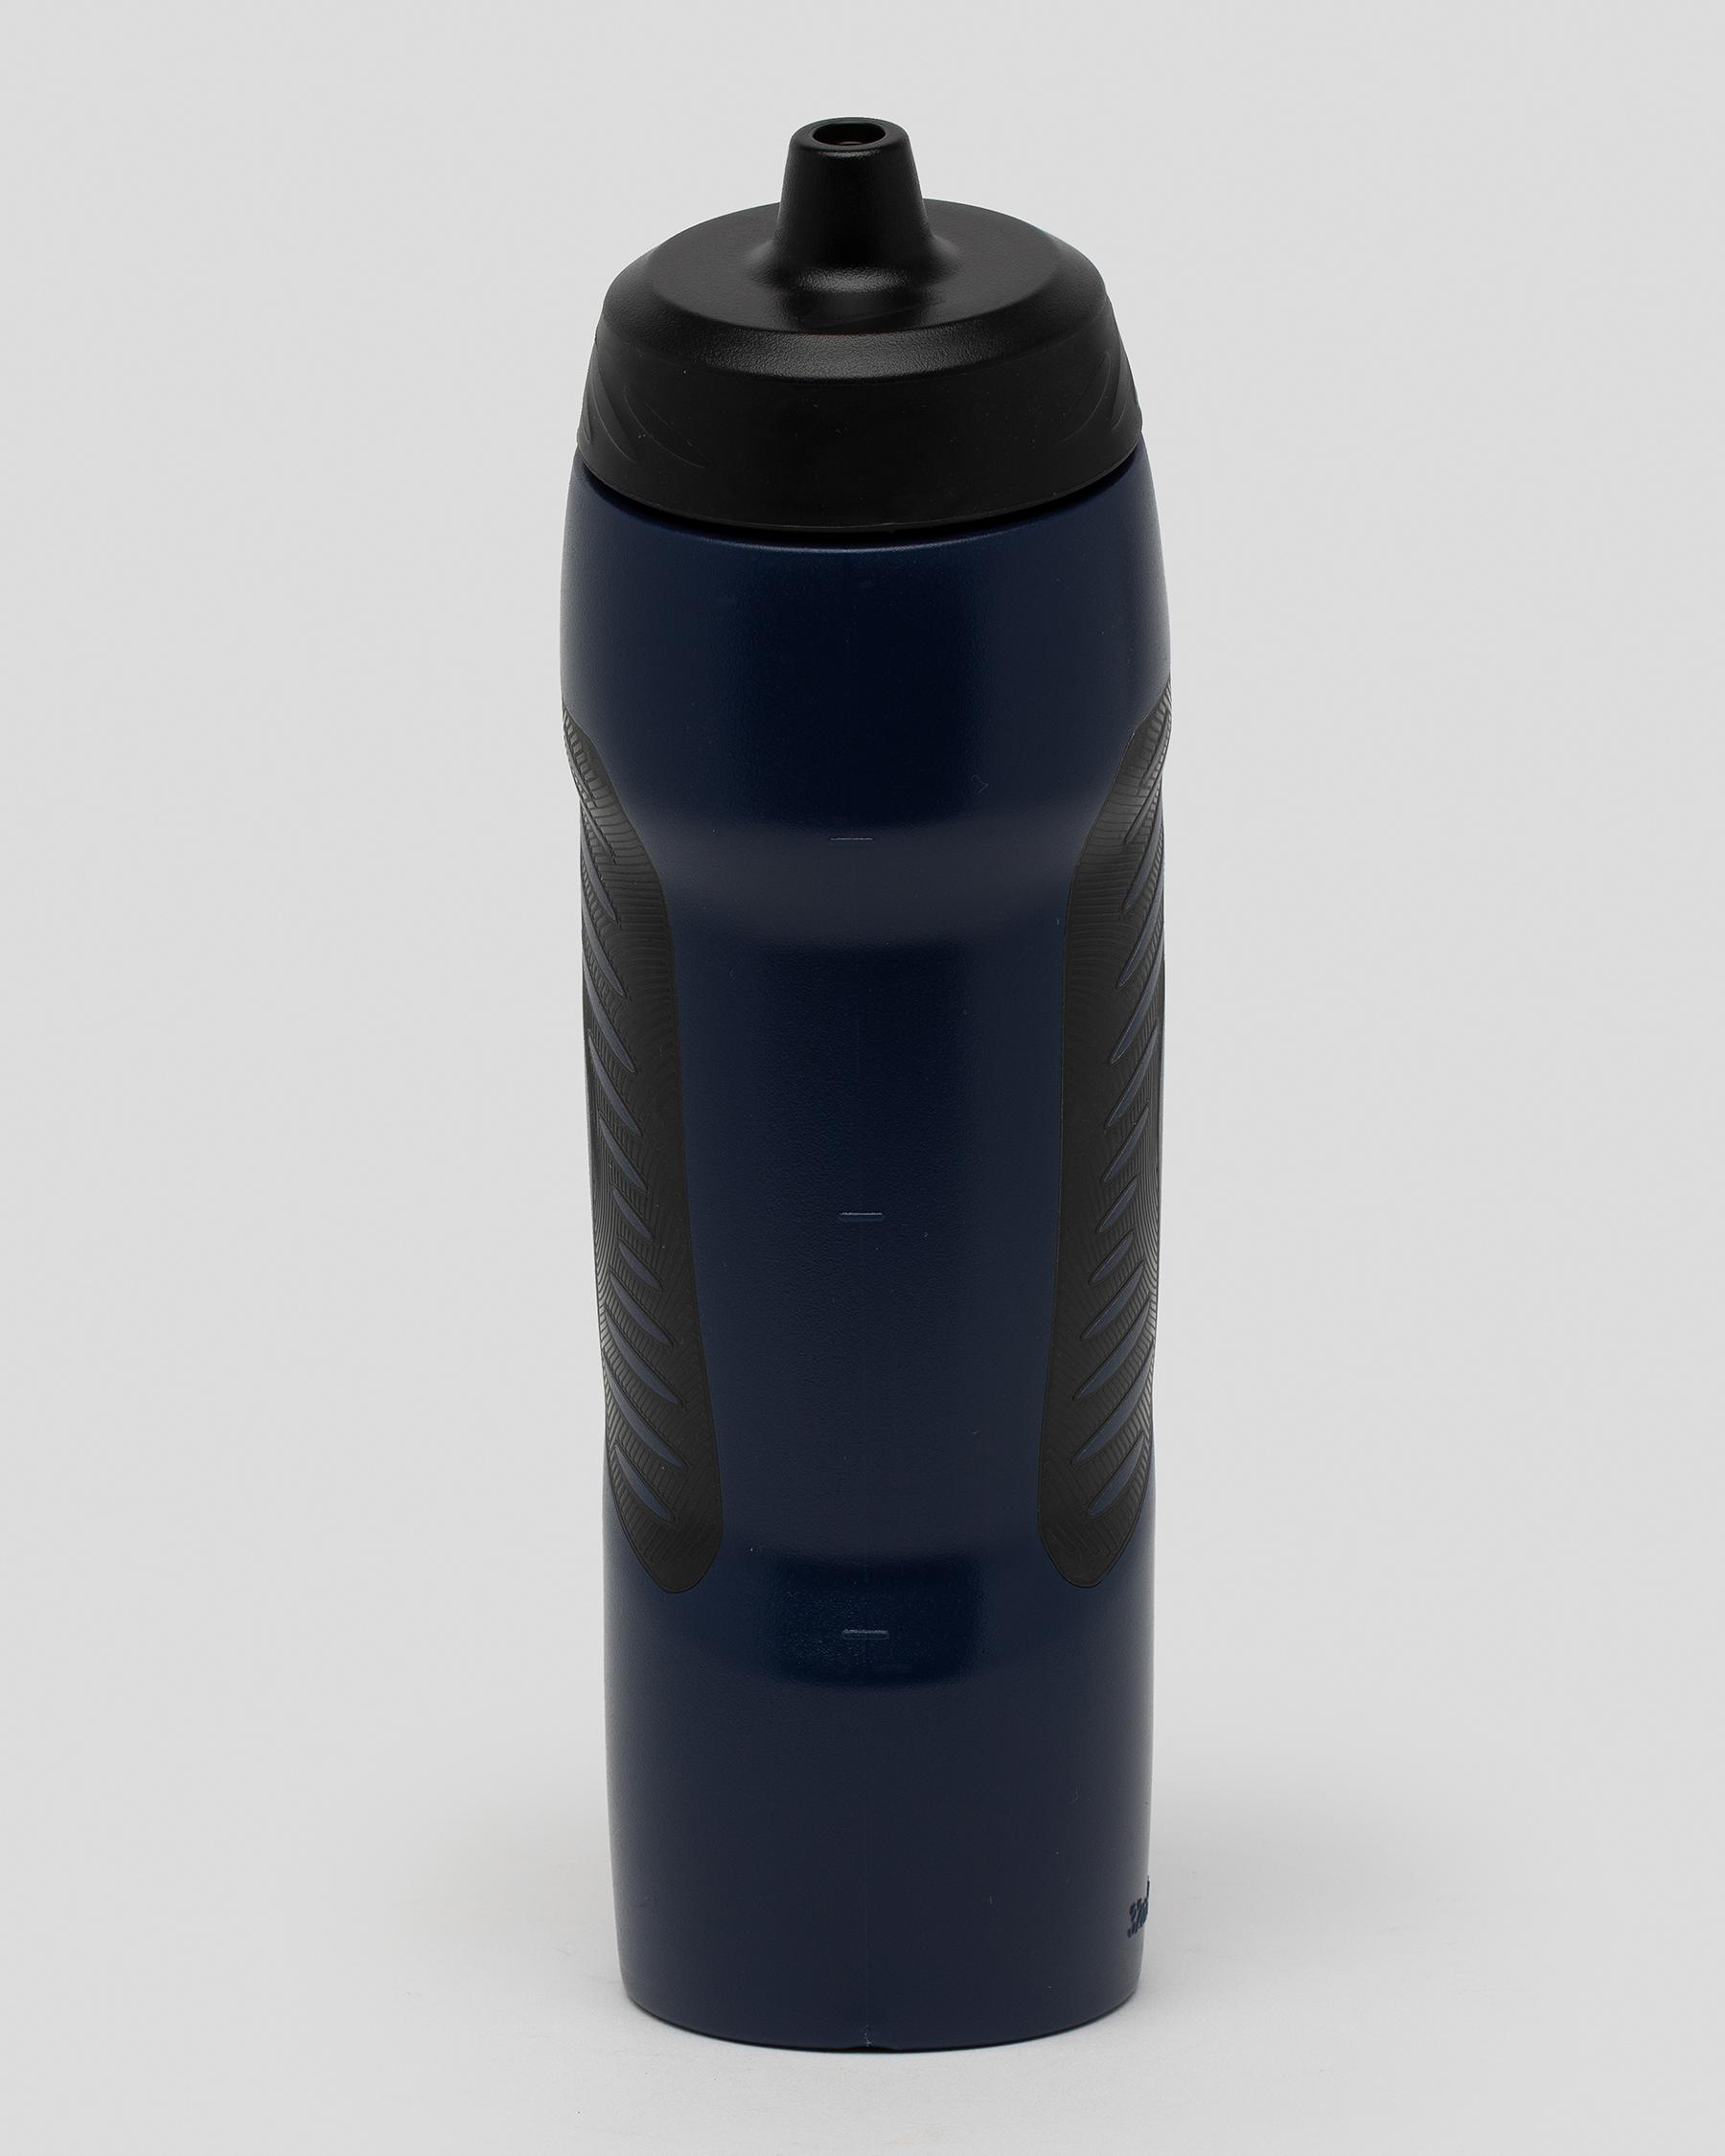 Under Armour Dominate 24 oz Water Bottle